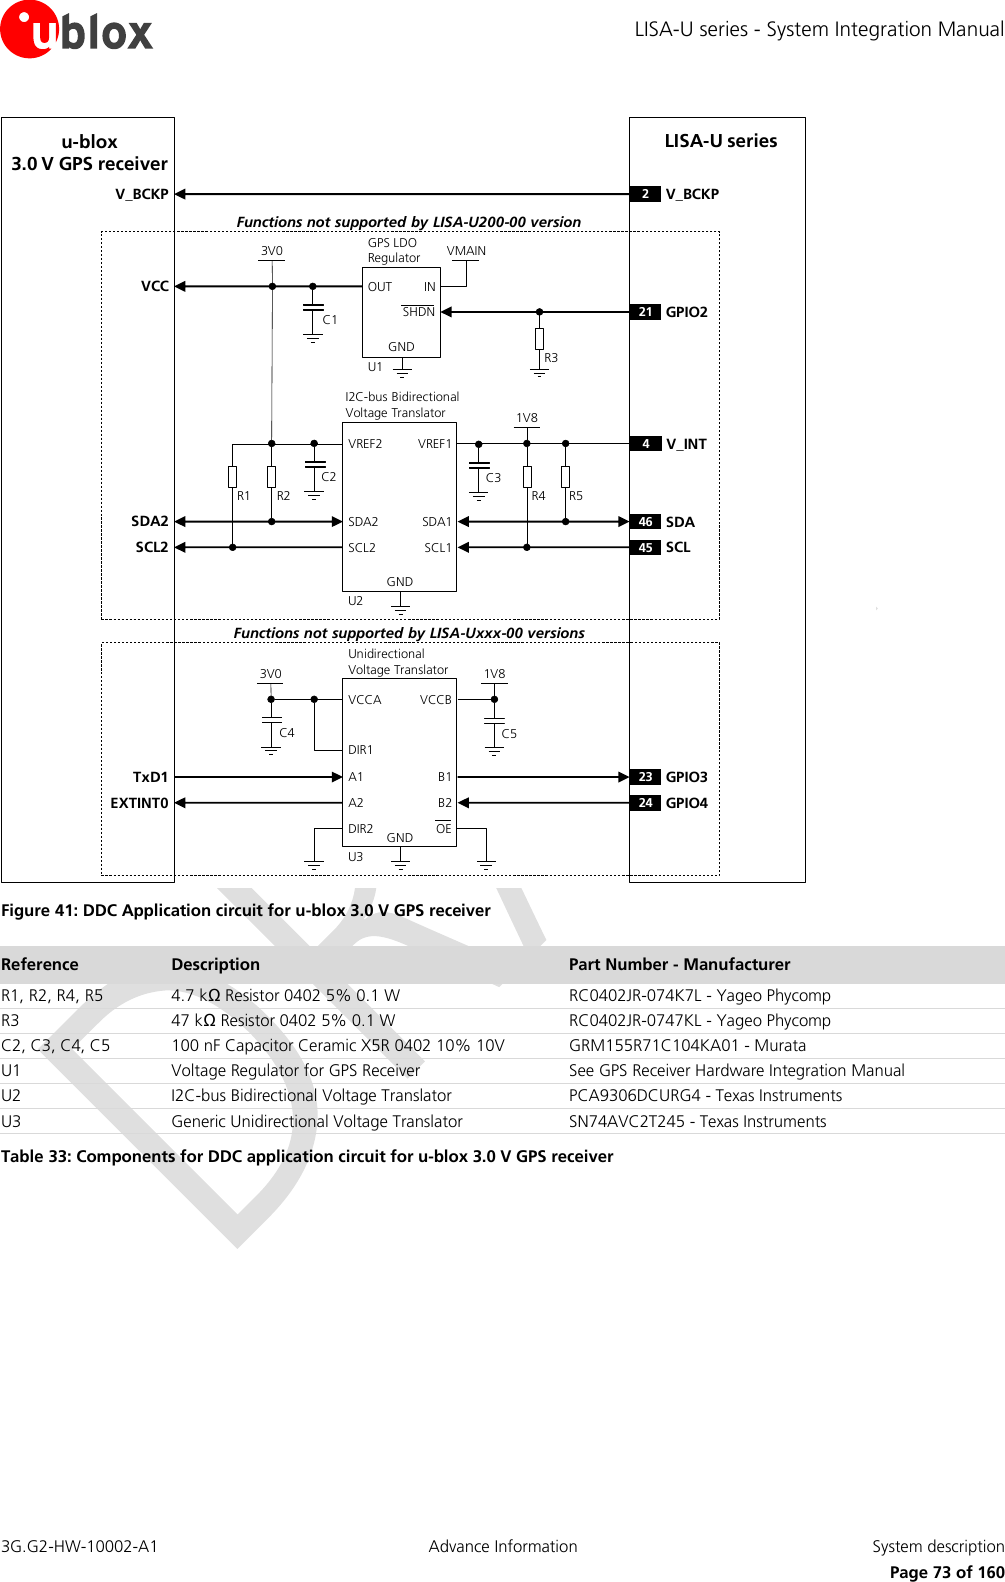 LISA-U series - System Integration Manual 3G.G2-HW-10002-A1  Advance Information  System description      Page 73 of 160 LISA-U seriesu-blox3.0 V GPS receiver23 GPIO324 GPIO41V8B1 A1GNDU3B2A2VCCBVCCAUnidirectionalVoltage TranslatorC4 C53V0TxD1EXTINT0R1INOUTGNDGPS LDORegulatorSHDNR2VMAIN3V0U121 GPIO246 SDA45 SCLR4 R51V8SDA1 SDA2GNDU2SCL1SCL2VREF1VREF2I2C-bus Bidirectional Voltage Translator4V_INTC1C2 C3R3SDA2SCL2VCCFunctions not supported by LISA-Uxxx-00 versionsDIR1DIR22V_BCKPV_BCKPOEFunctions not supported by LISA-U200-00 version Figure 41: DDC Application circuit for u-blox 3.0 V GPS receiver Reference Description Part Number - Manufacturer R1, R2, R4, R5 4.7 kΩ Resistor 0402 5% 0.1 W  RC0402JR-074K7L - Yageo Phycomp R3 47 kΩ Resistor 0402 5% 0.1 W  RC0402JR-0747KL - Yageo Phycomp C2, C3, C4, C5 100 nF Capacitor Ceramic X5R 0402 10% 10V GRM155R71C104KA01 - Murata U1 Voltage Regulator for GPS Receiver See GPS Receiver Hardware Integration Manual U2 I2C-bus Bidirectional Voltage Translator PCA9306DCURG4 - Texas Instruments U3 Generic Unidirectional Voltage Translator SN74AVC2T245 - Texas Instruments Table 33: Components for DDC application circuit for u-blox 3.0 V GPS receiver  